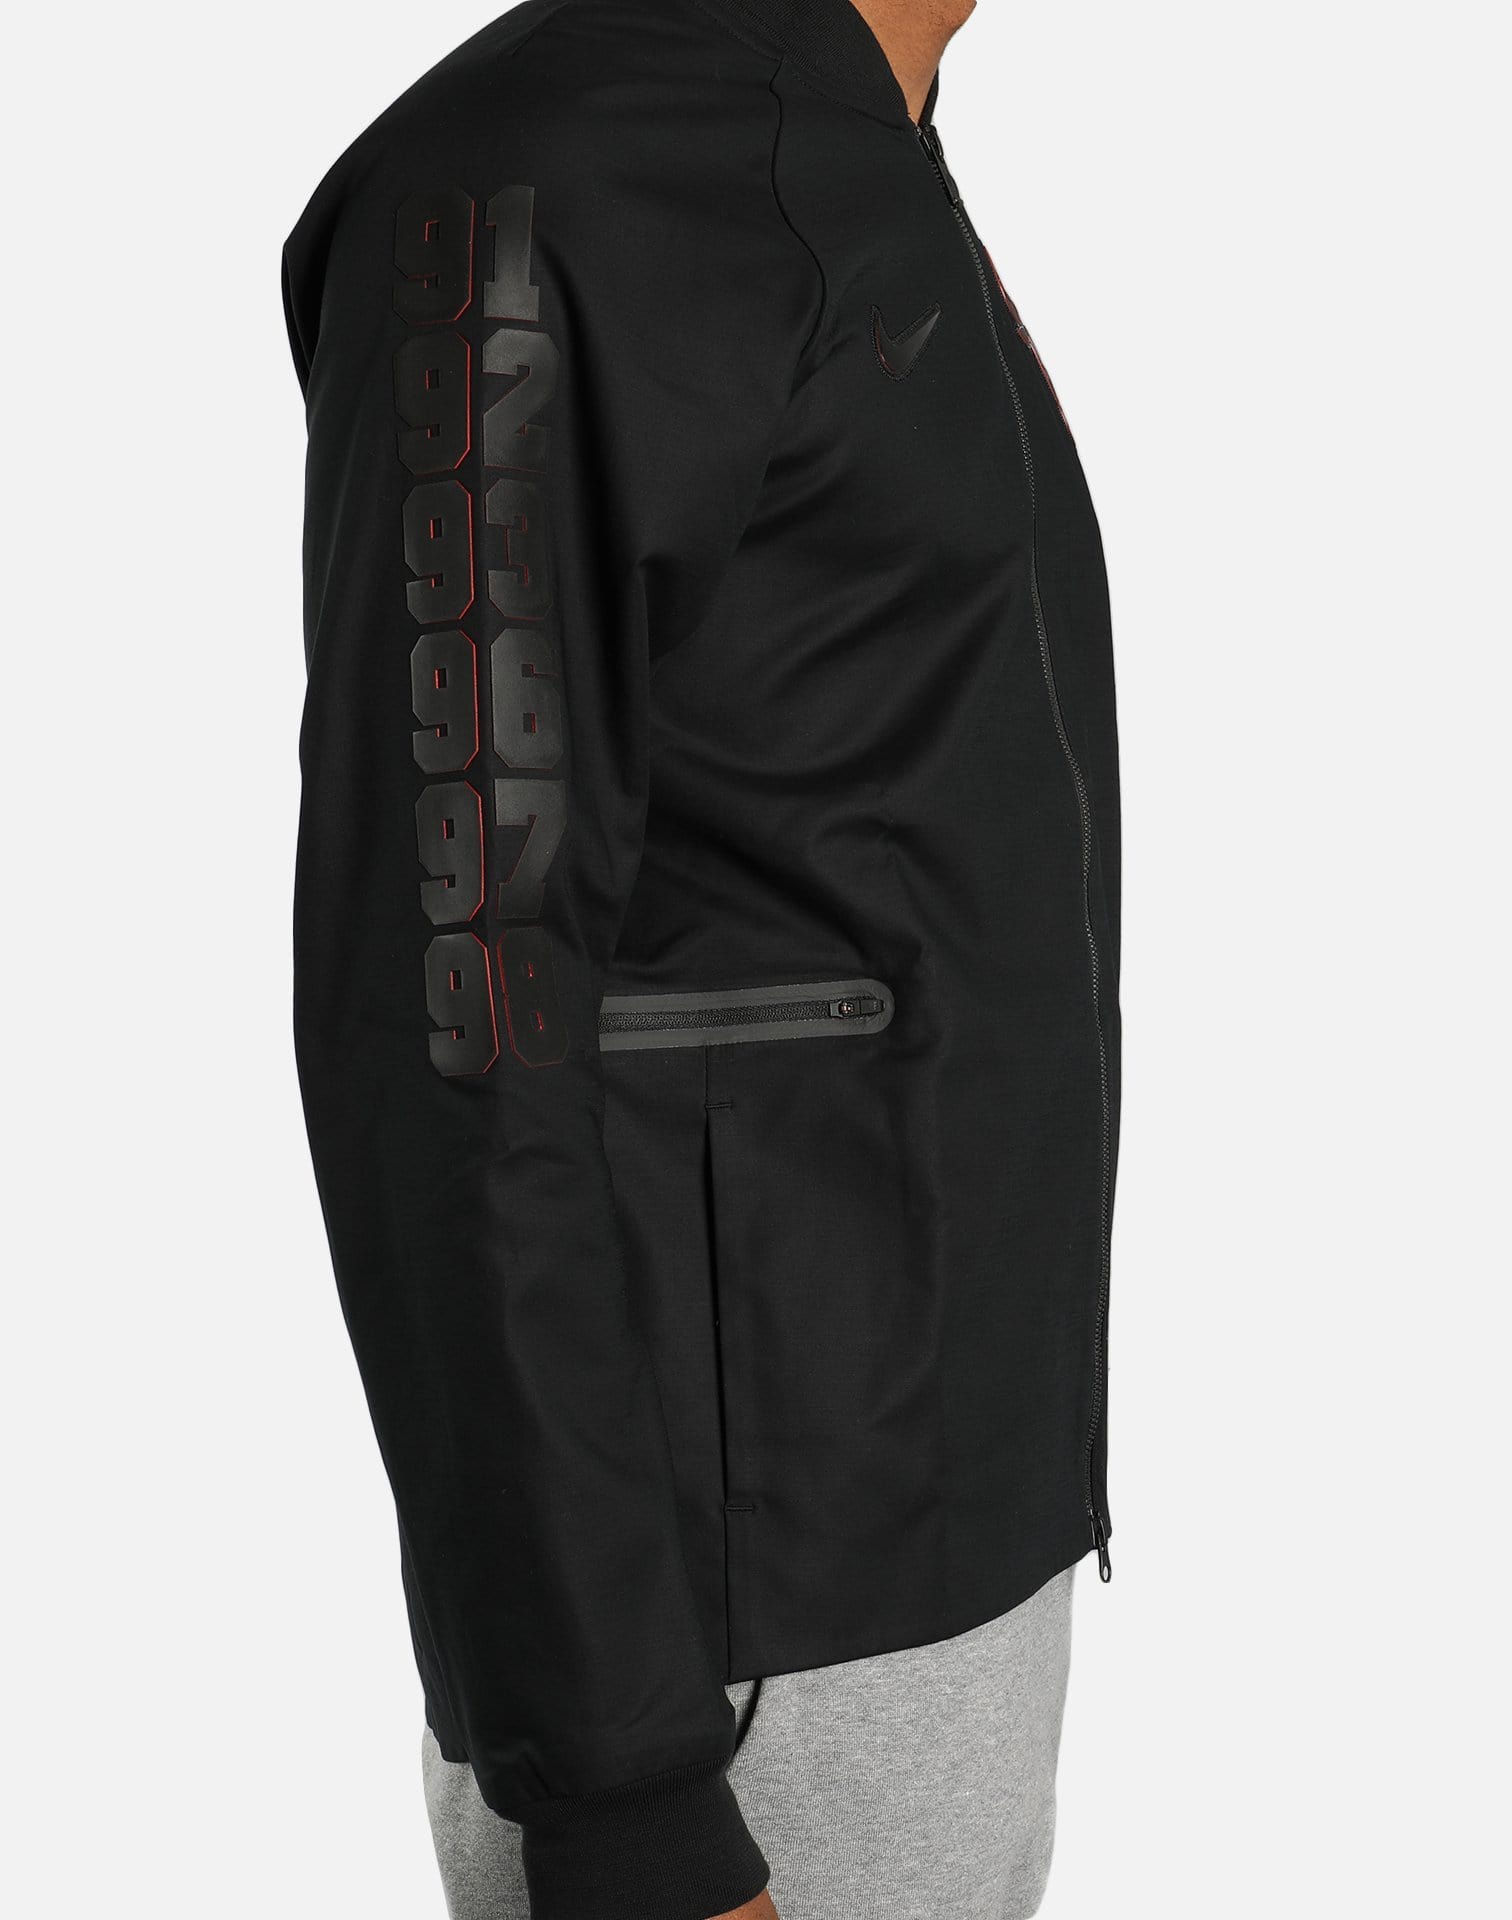 Nike NBA Chicago Bulls Modern Varsity Jacket (Black)